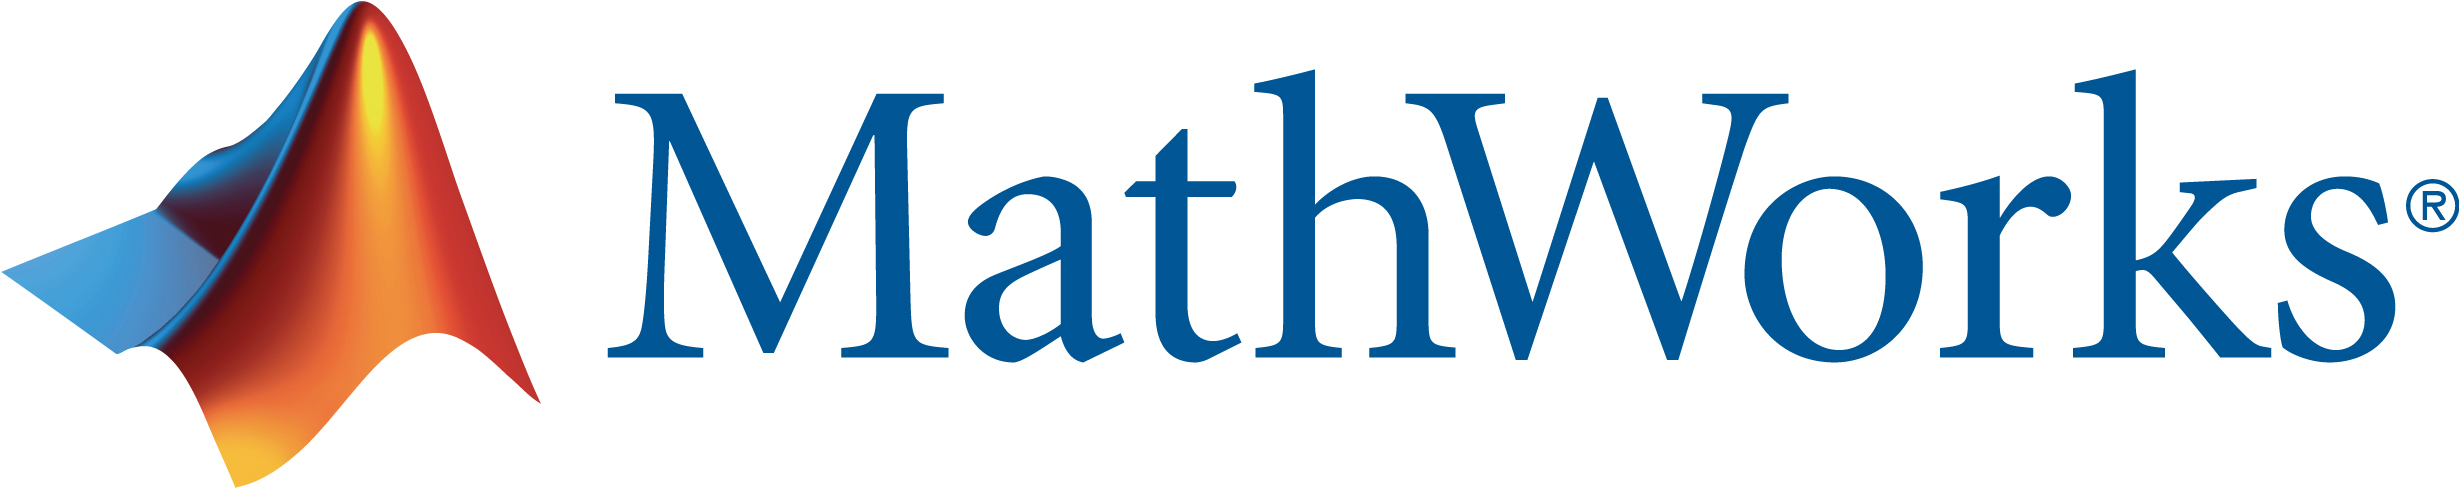 mathwork logo image